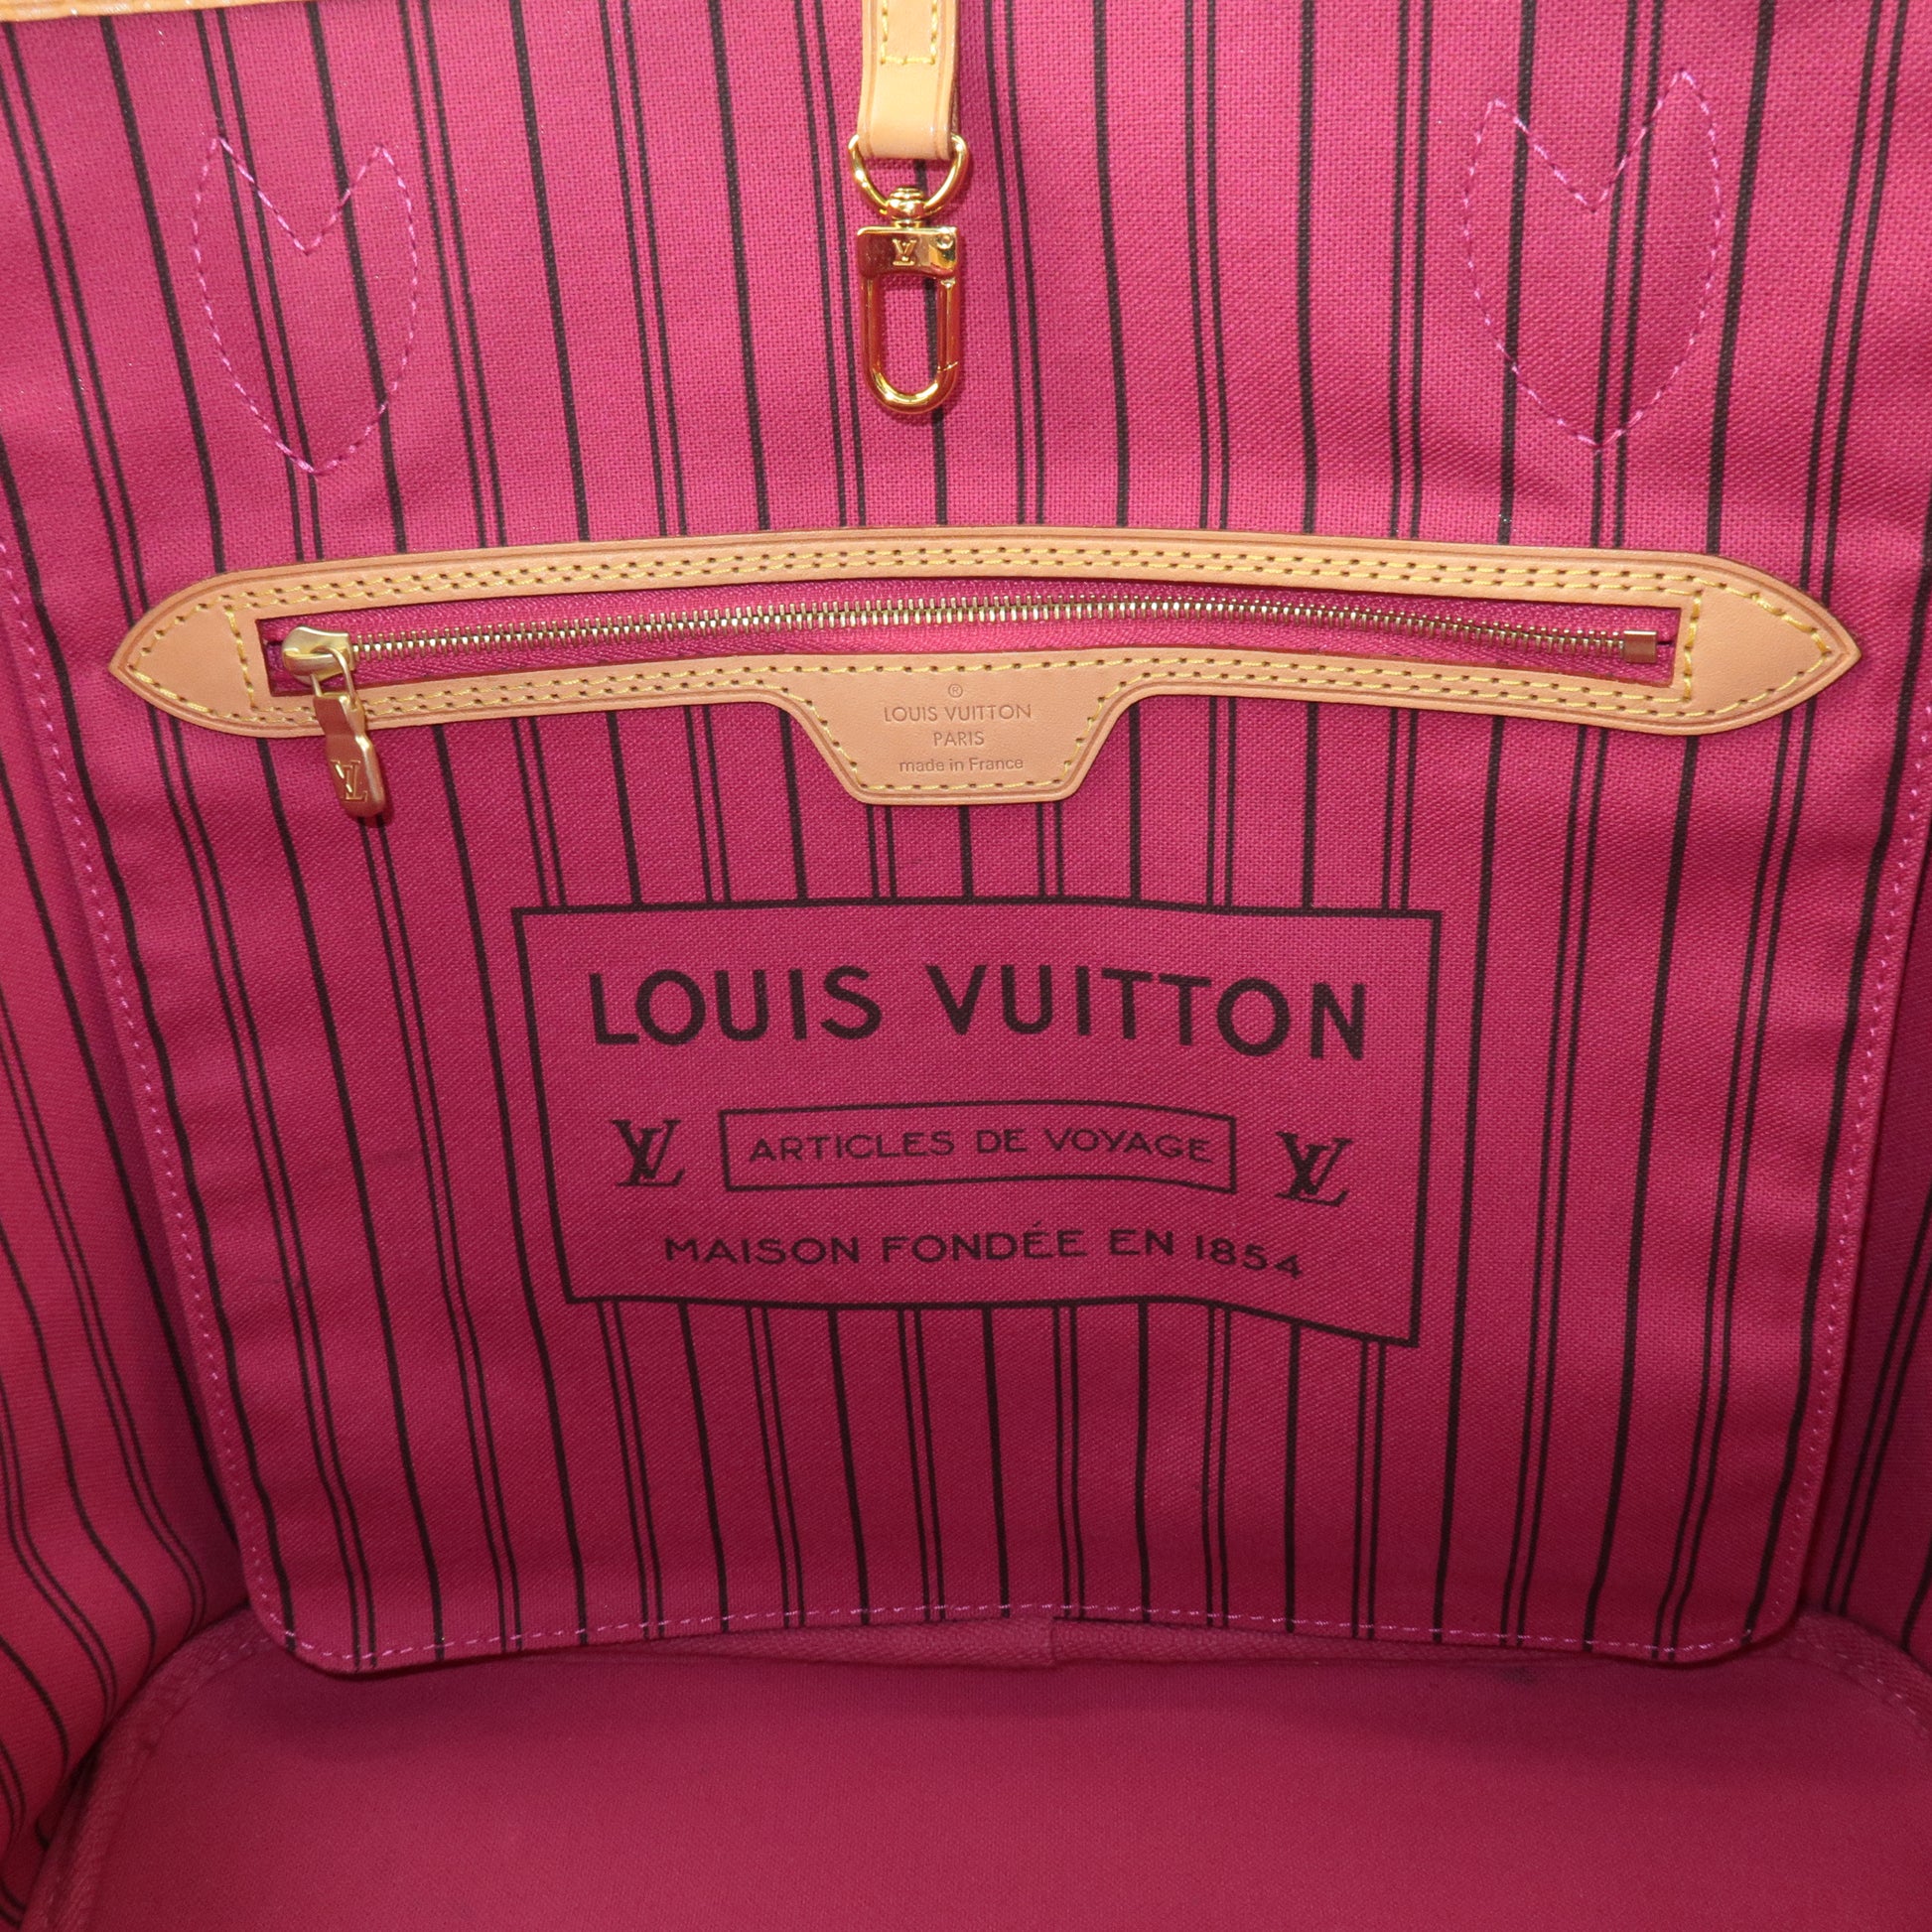 Louis Vuitton F/W 20 Since 1854 Neverfull MM Auction